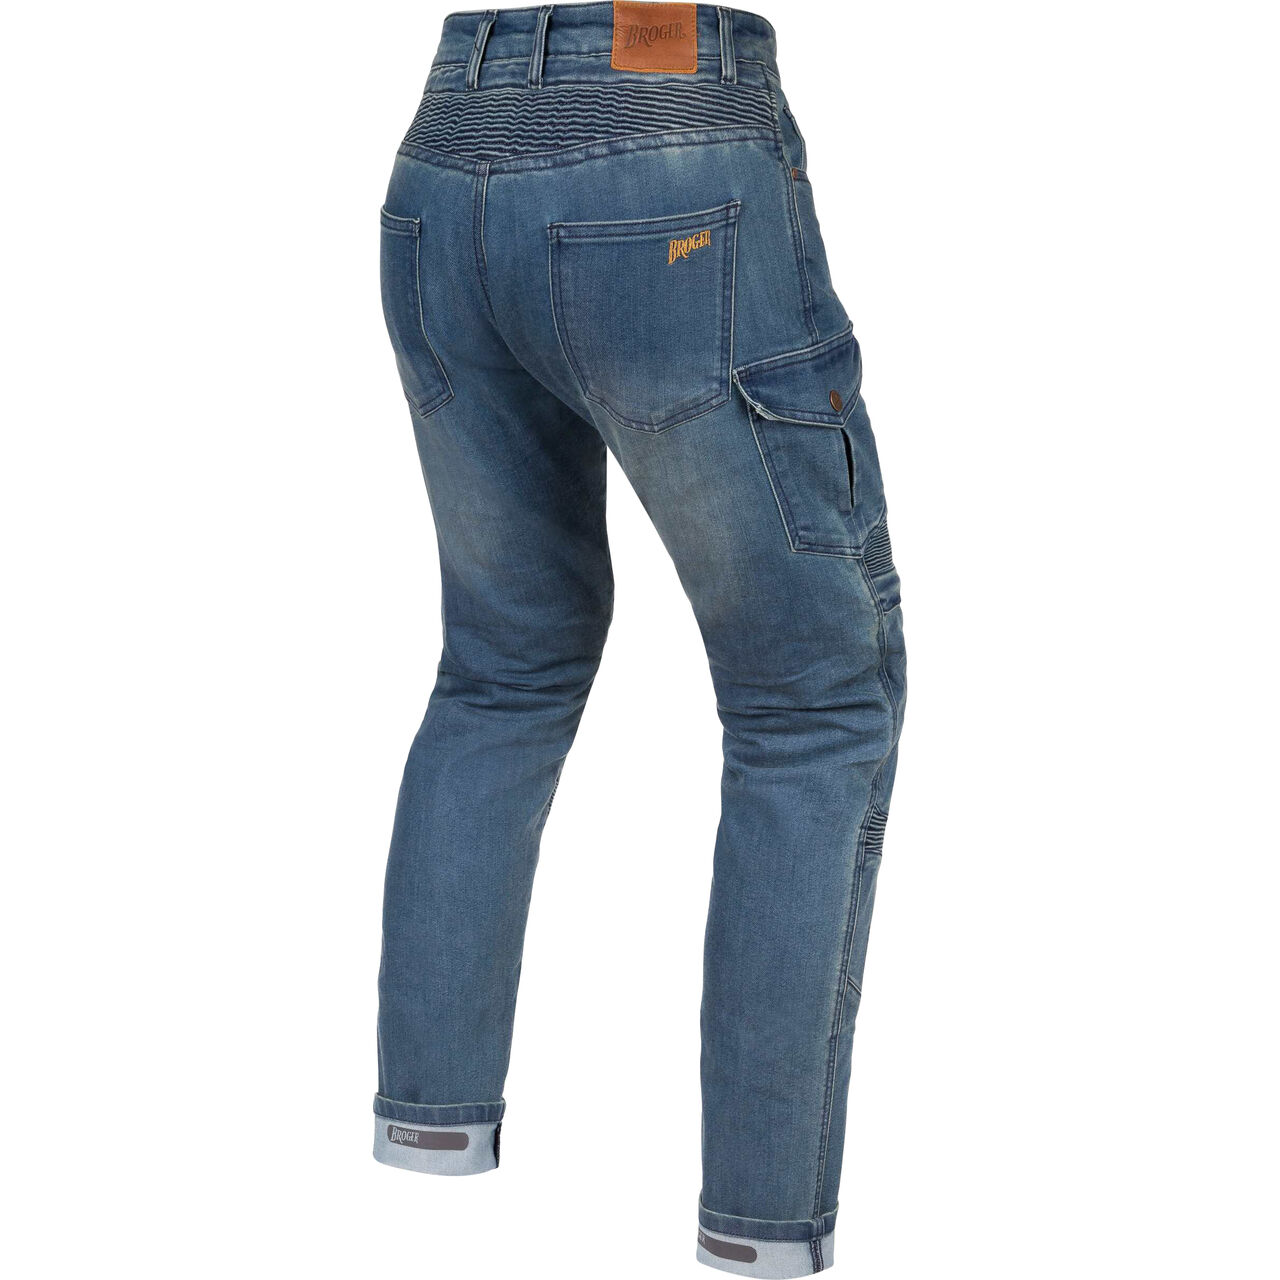 Ohio pantalons jeans washed bleu